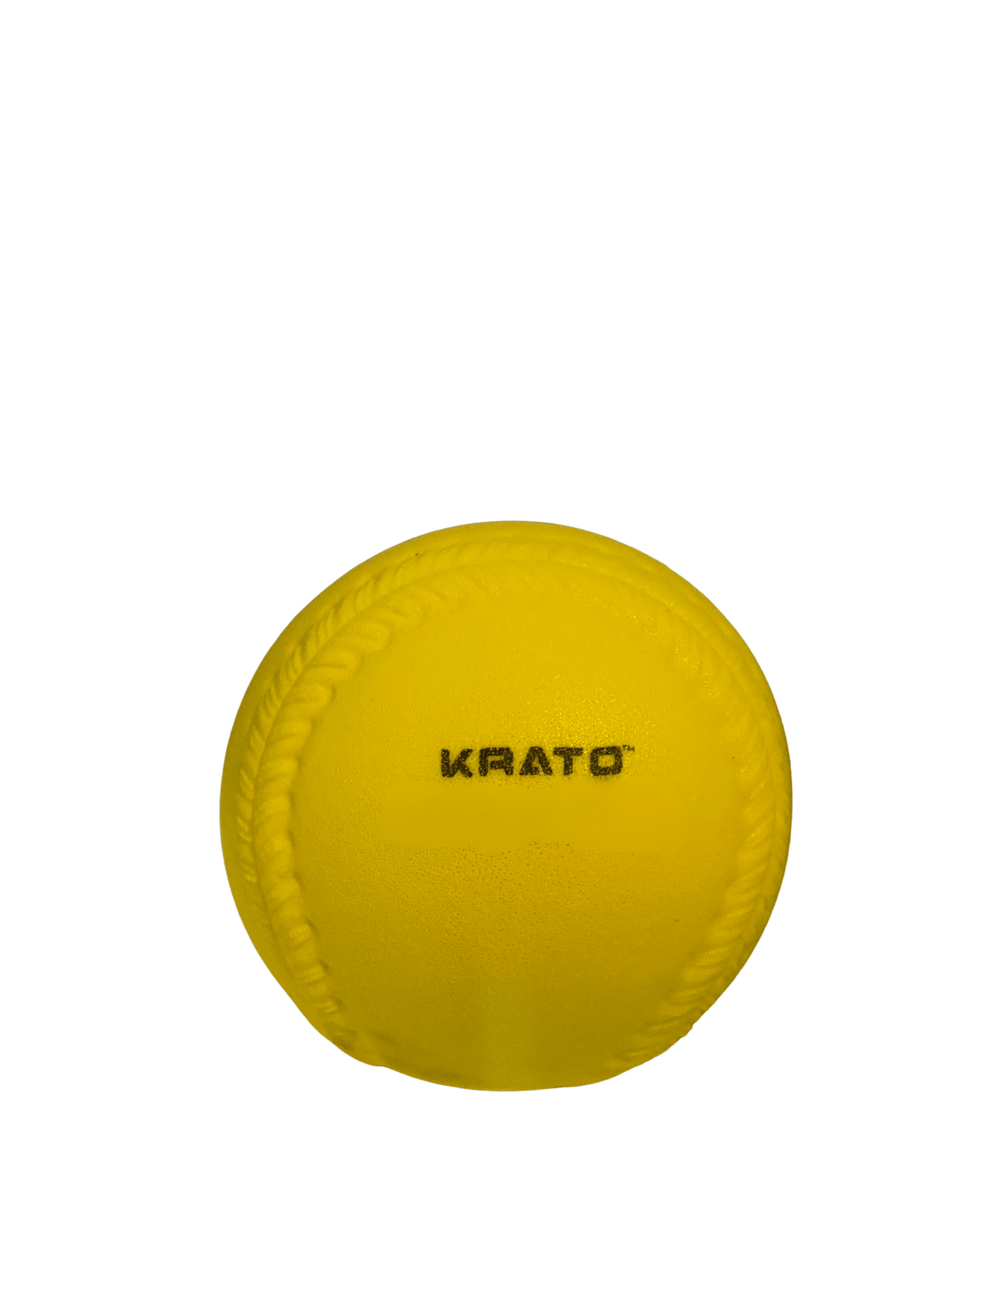 Krato Sports Training Baseballs set of 12 Pitching Machine Softballs -firm foam - 12" ( Back in April) | Krato Sports